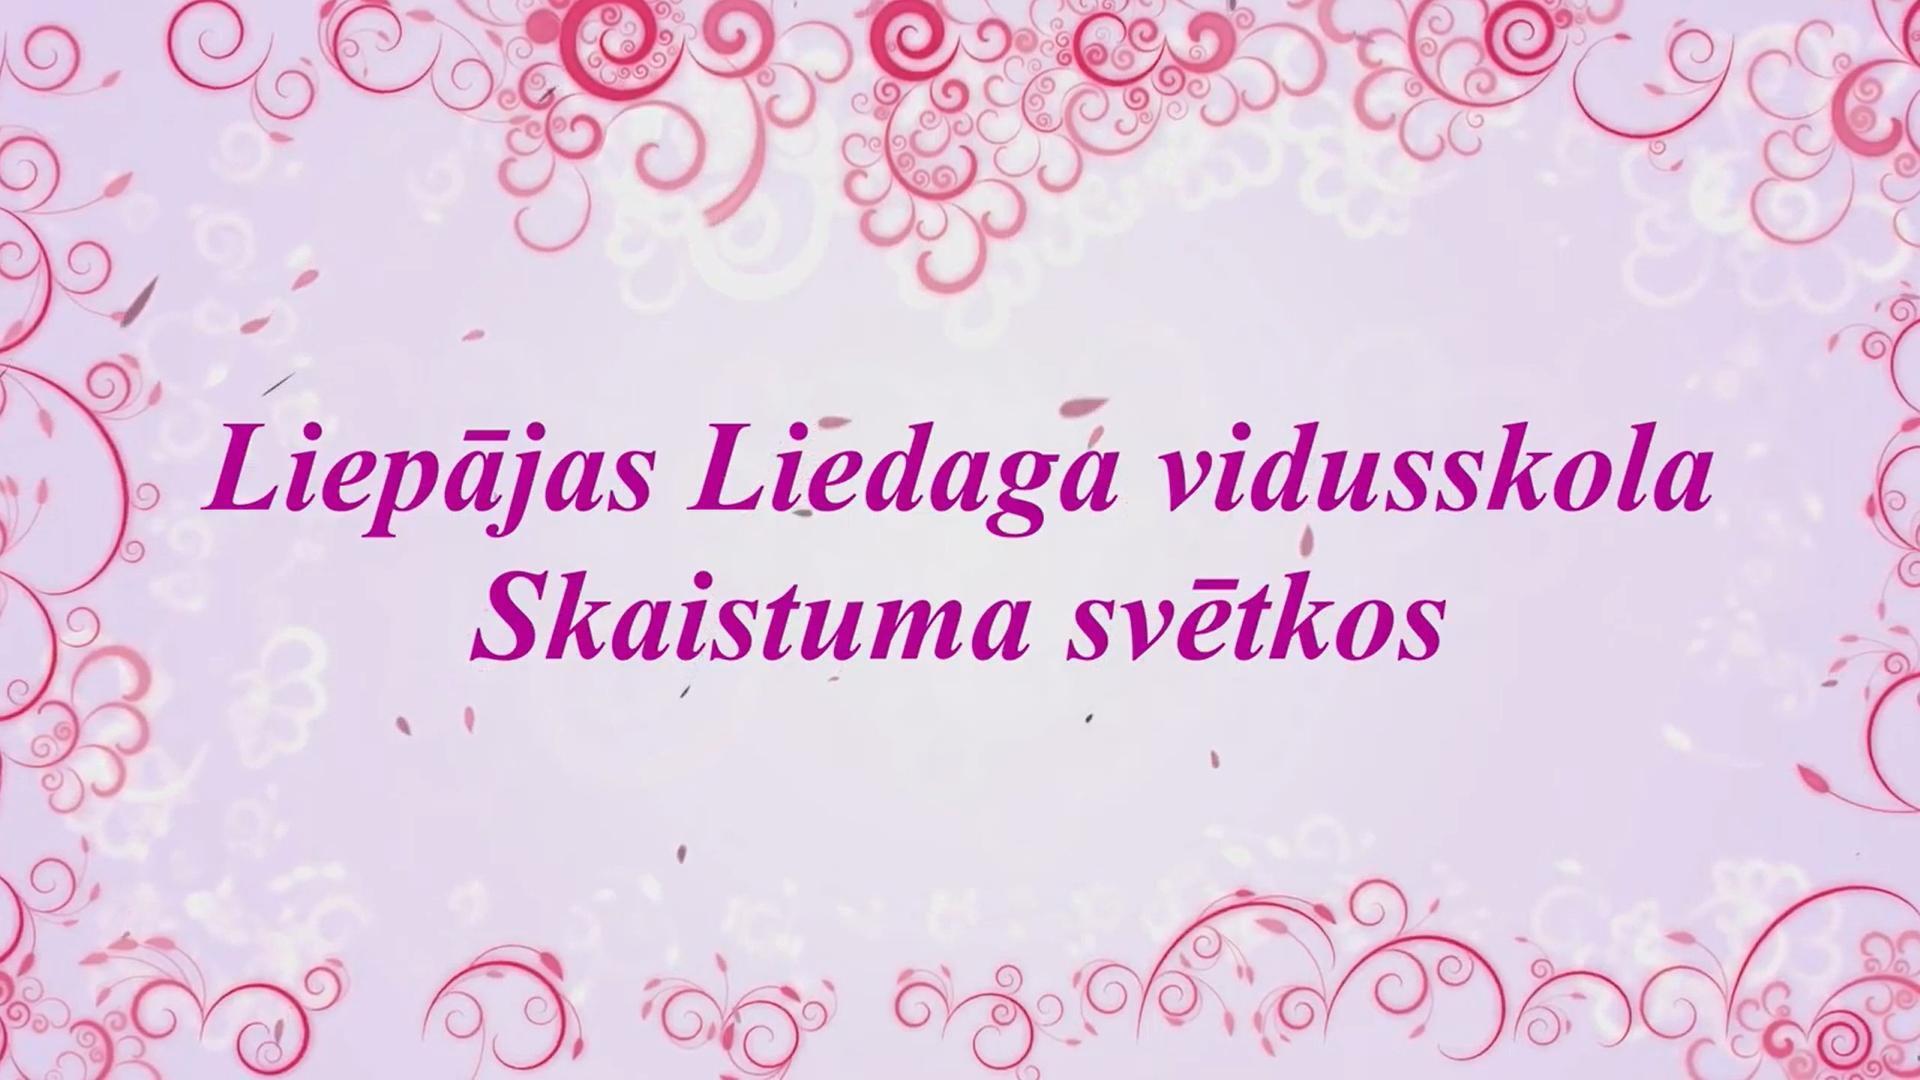 You are currently viewing Liepājas Liedaga vidusskolas skaistuma svētkos!